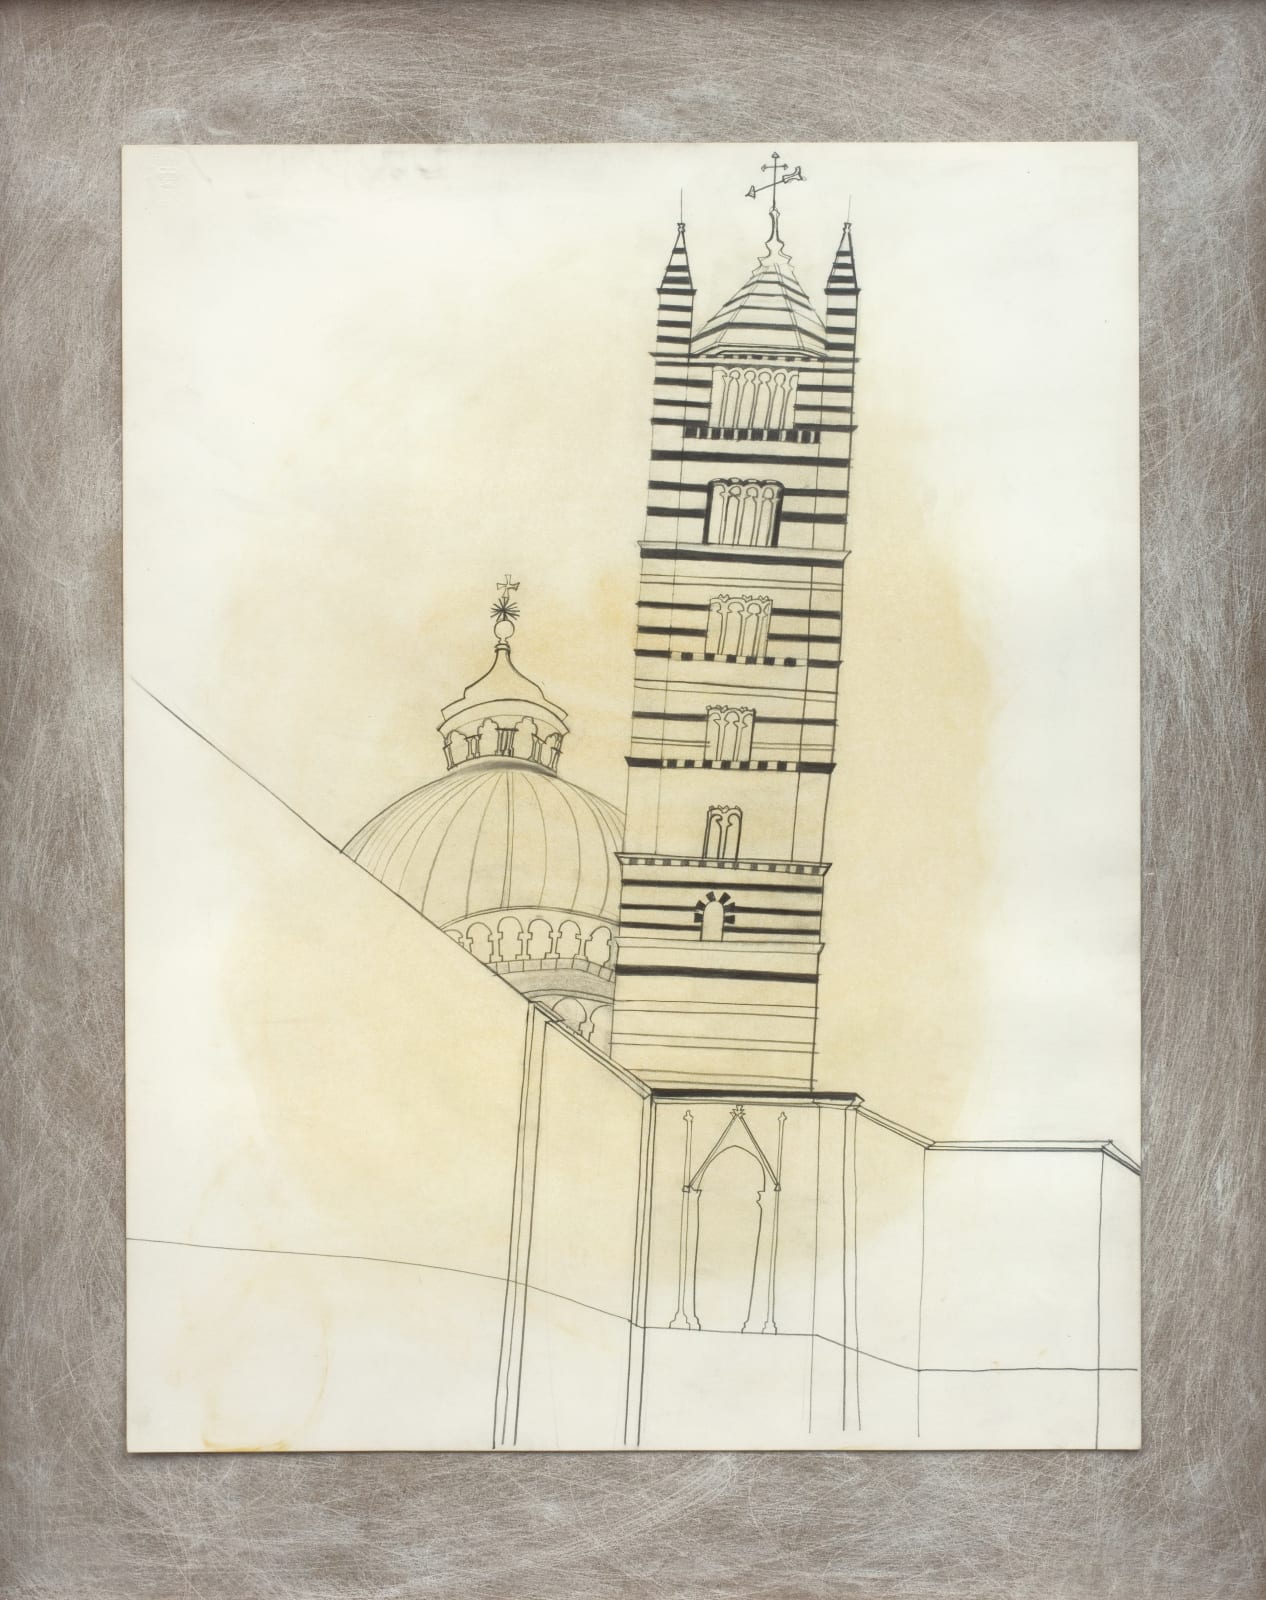 Ben Nicholson, May 1957 (Siena campanile), 1957